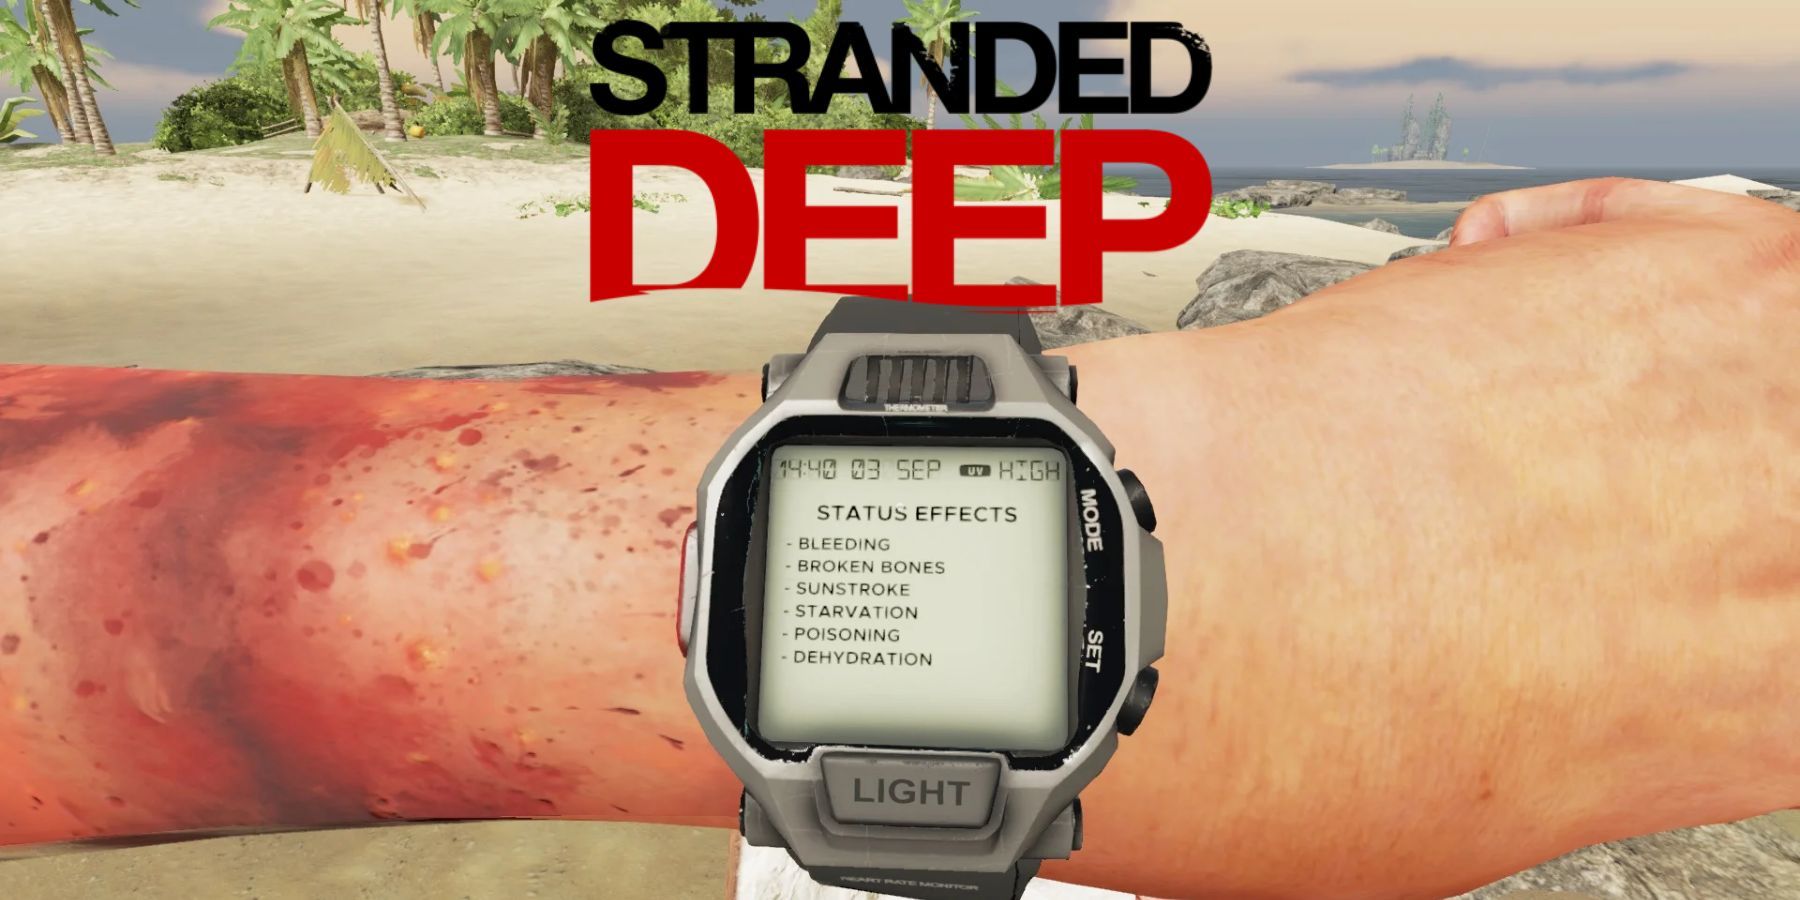 How To Make Splint In Stranded Deep